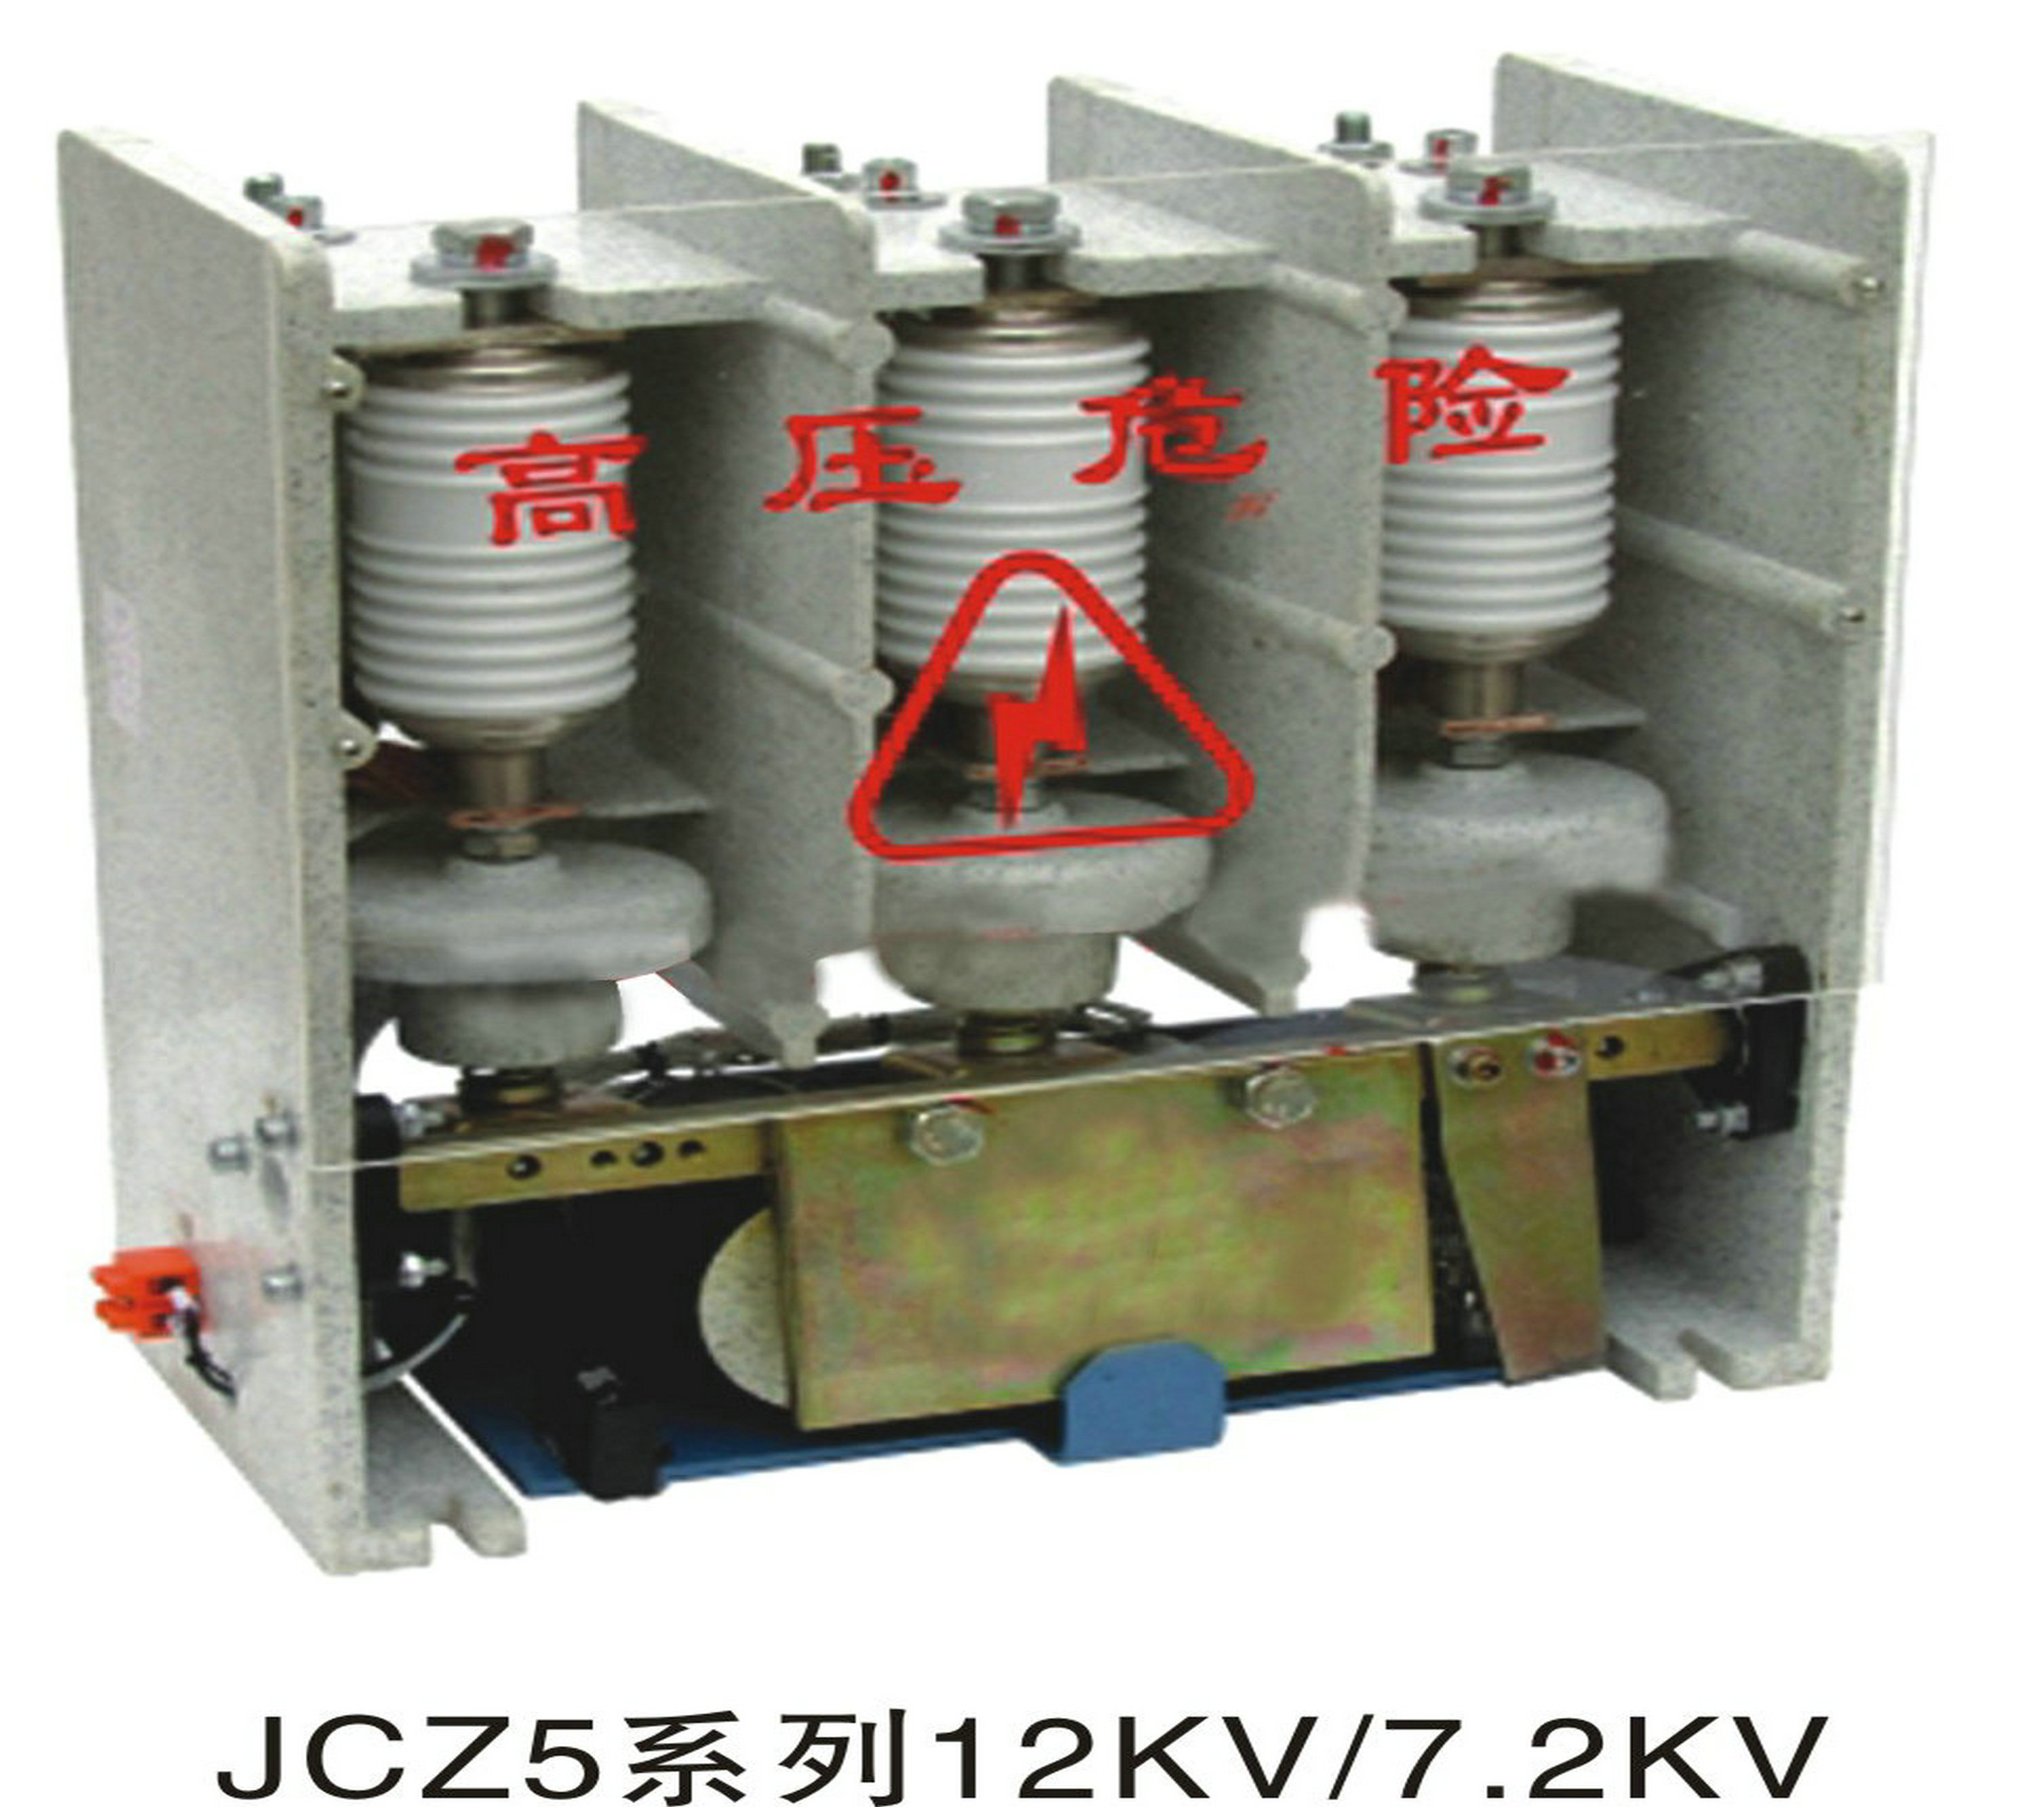 JCZ5系列12kv7.2kv投切电容器无功补偿专用高压真空